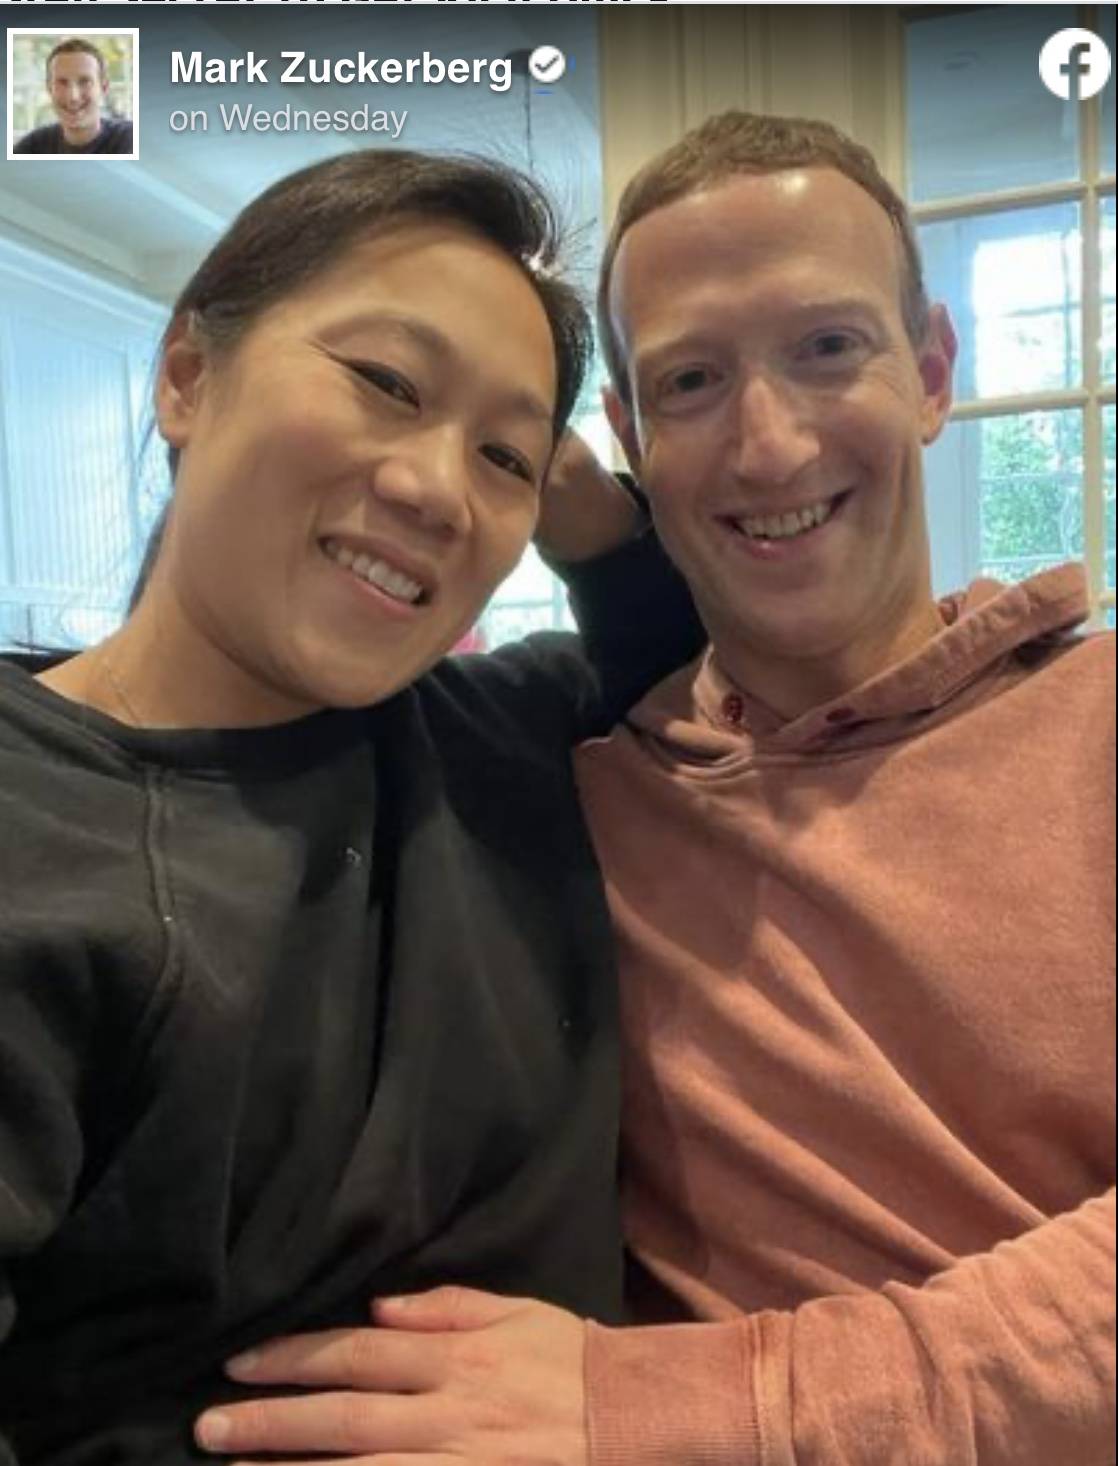 Mark Zuckerberg and Wife Priscilla Chan Expecting Baby No. 3